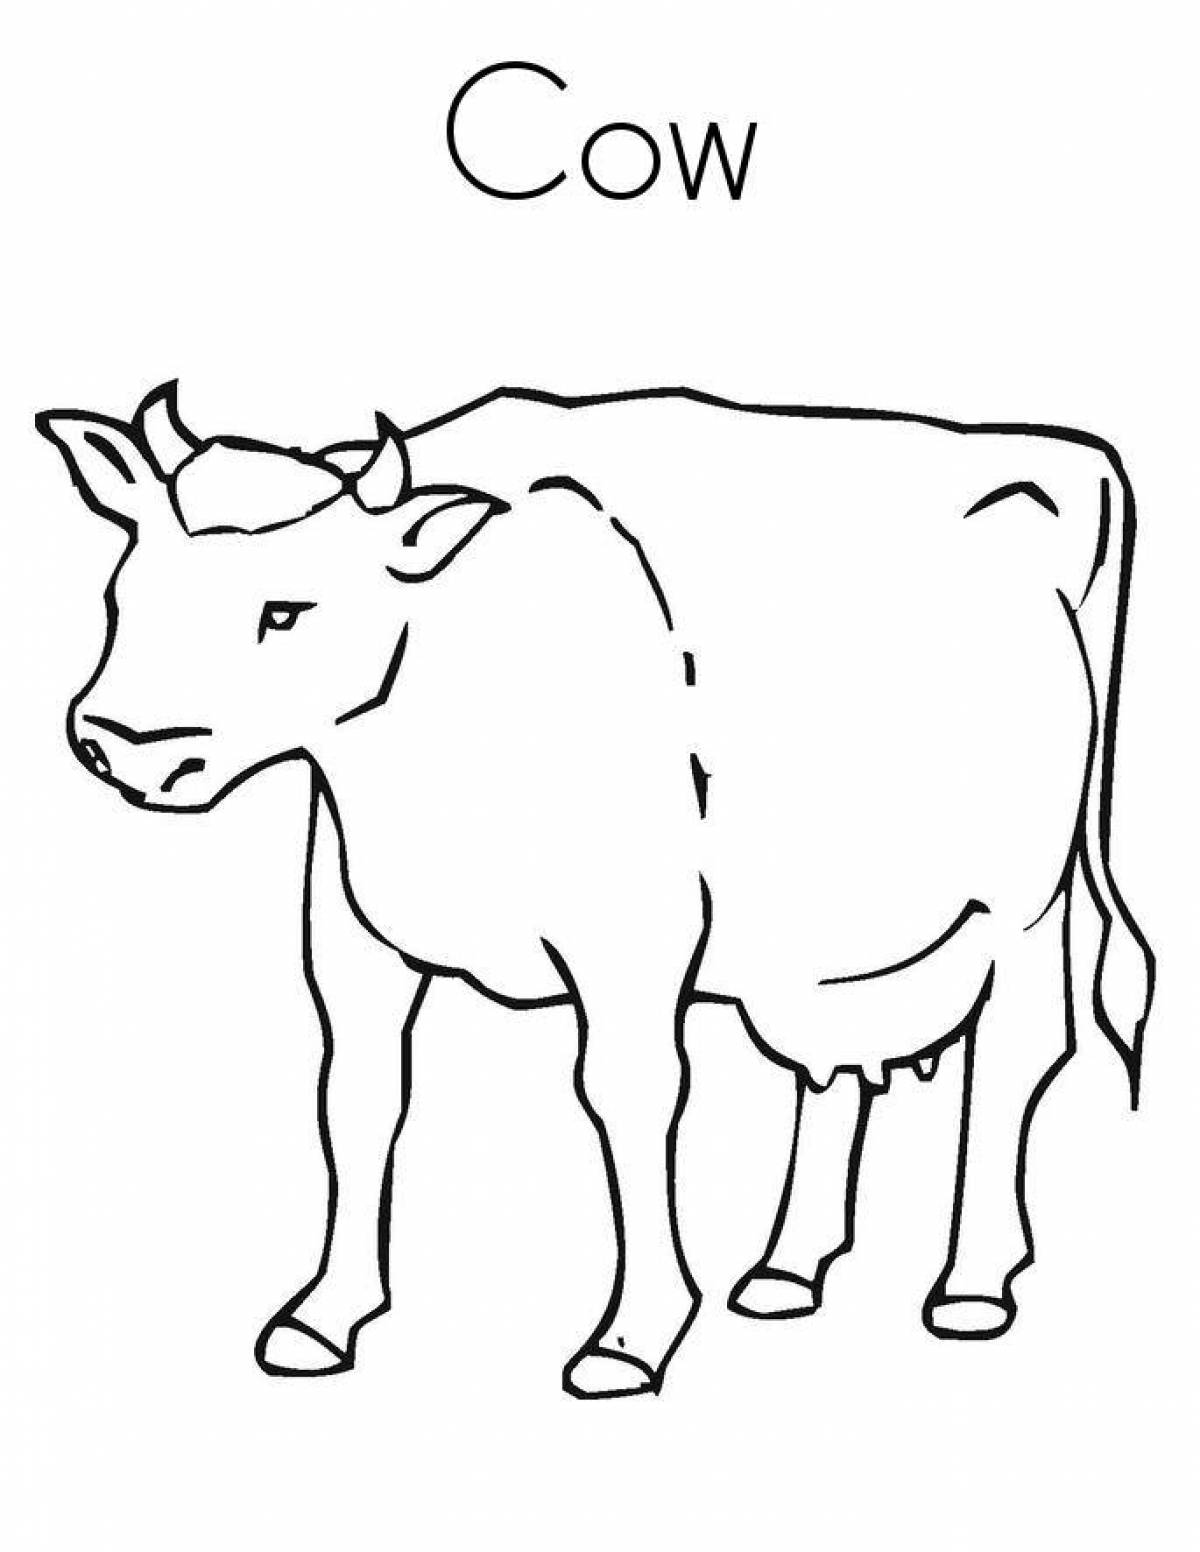 Cow#11